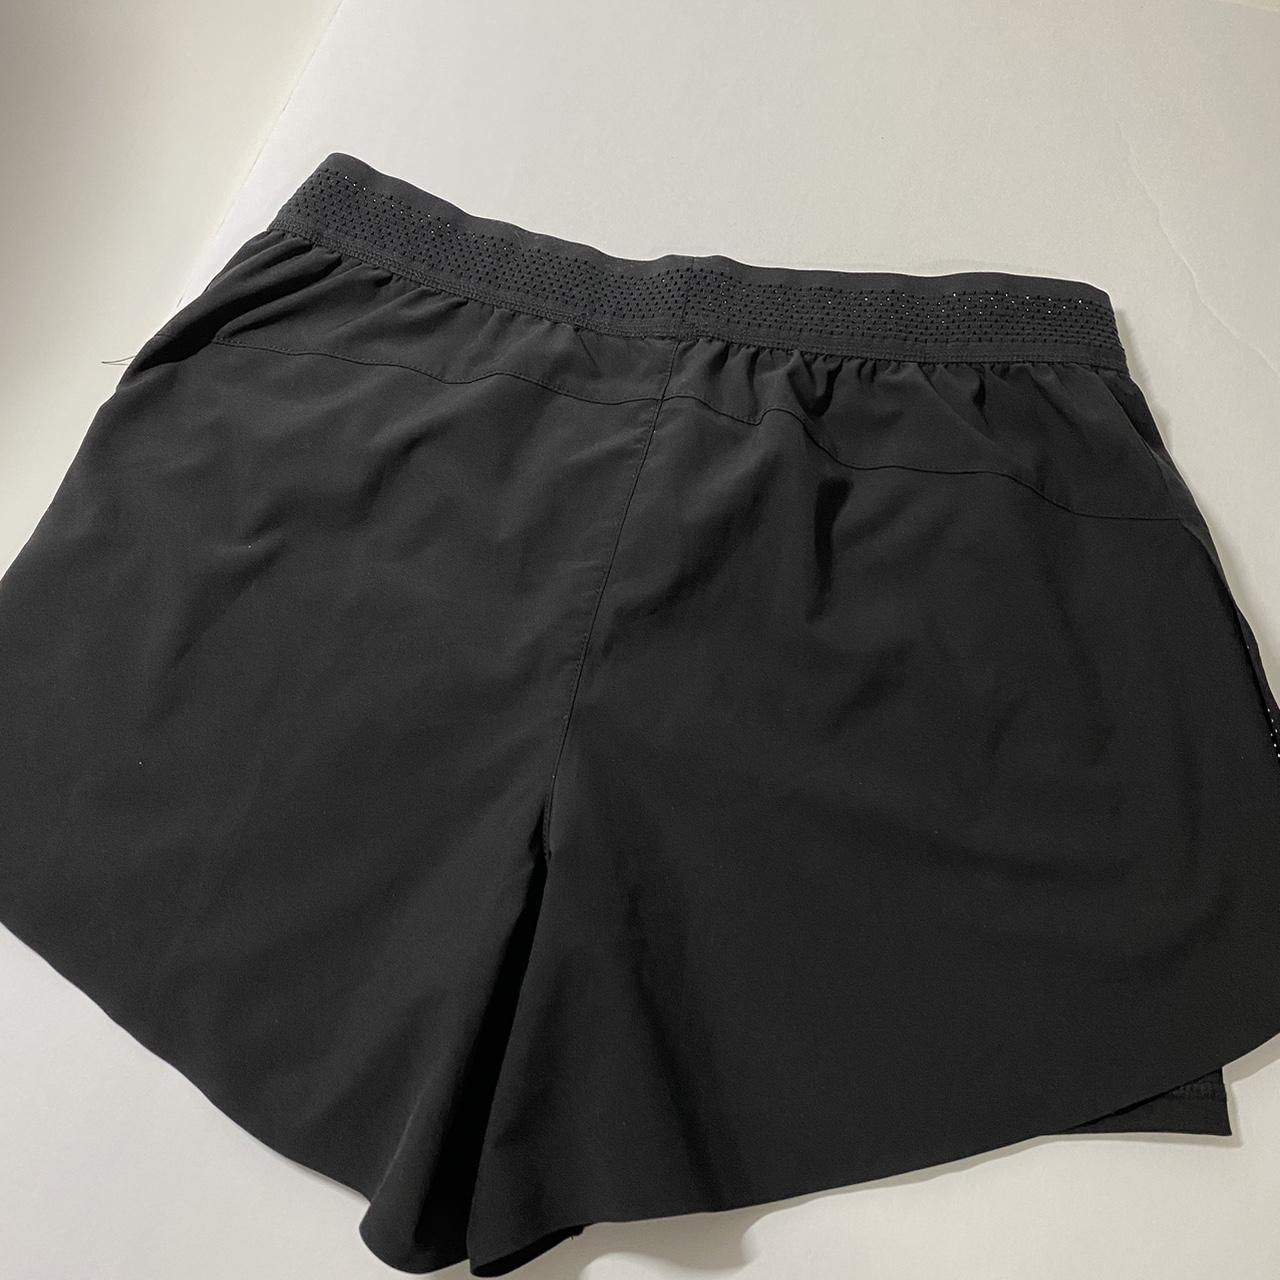 Avía Womens workout shorts Bottom lining Secret pocket - Depop